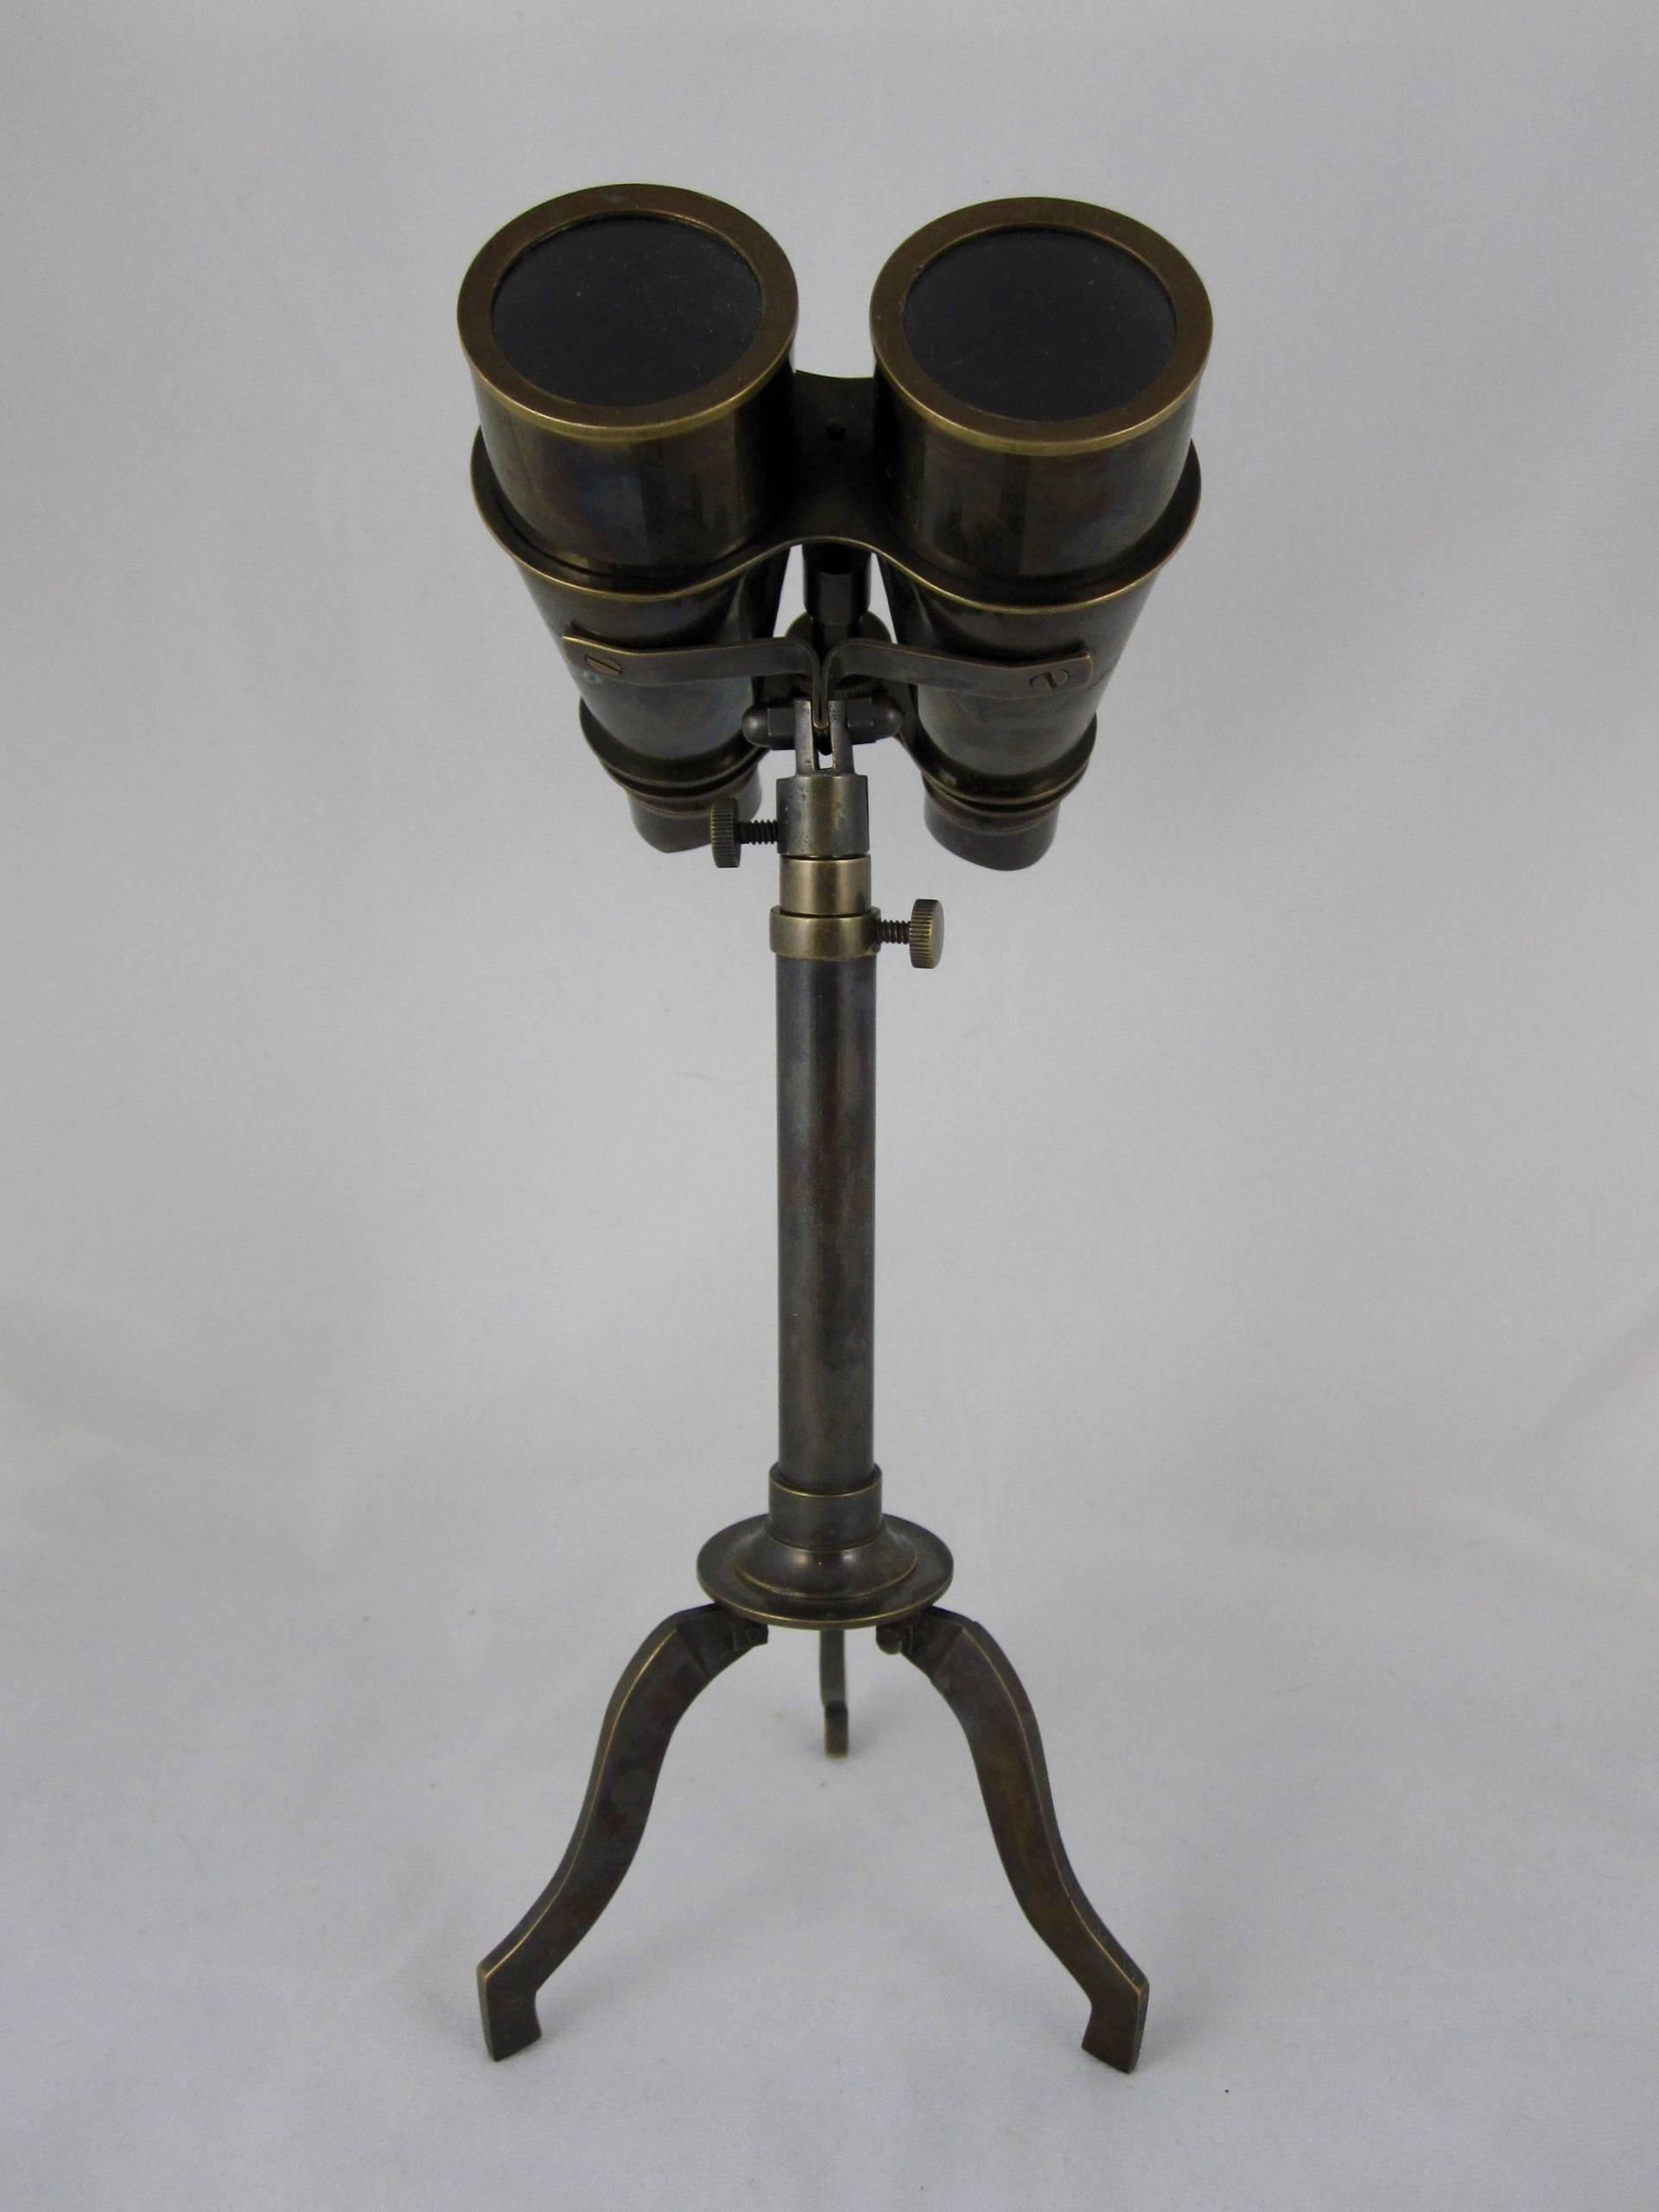 Blackened Vintage Brass Field Binoculars with Removable Folding Tripod Stand